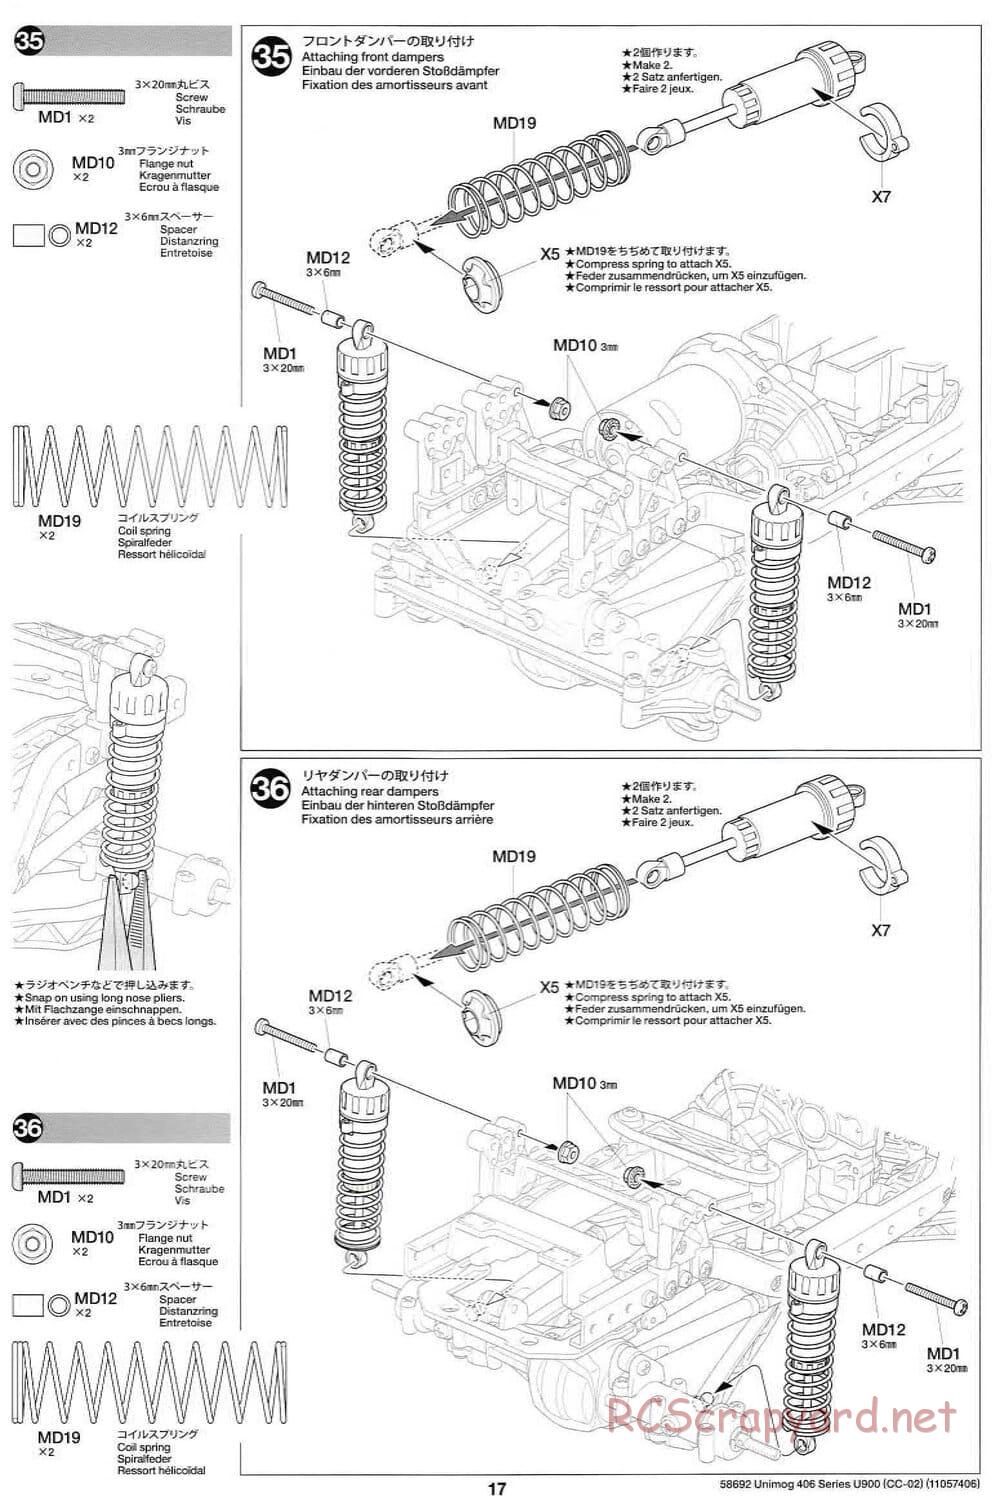 Tamiya - Mercedes-Benz Unimog 406 Series U900 - CC-02 Chassis - Manual - Page 17